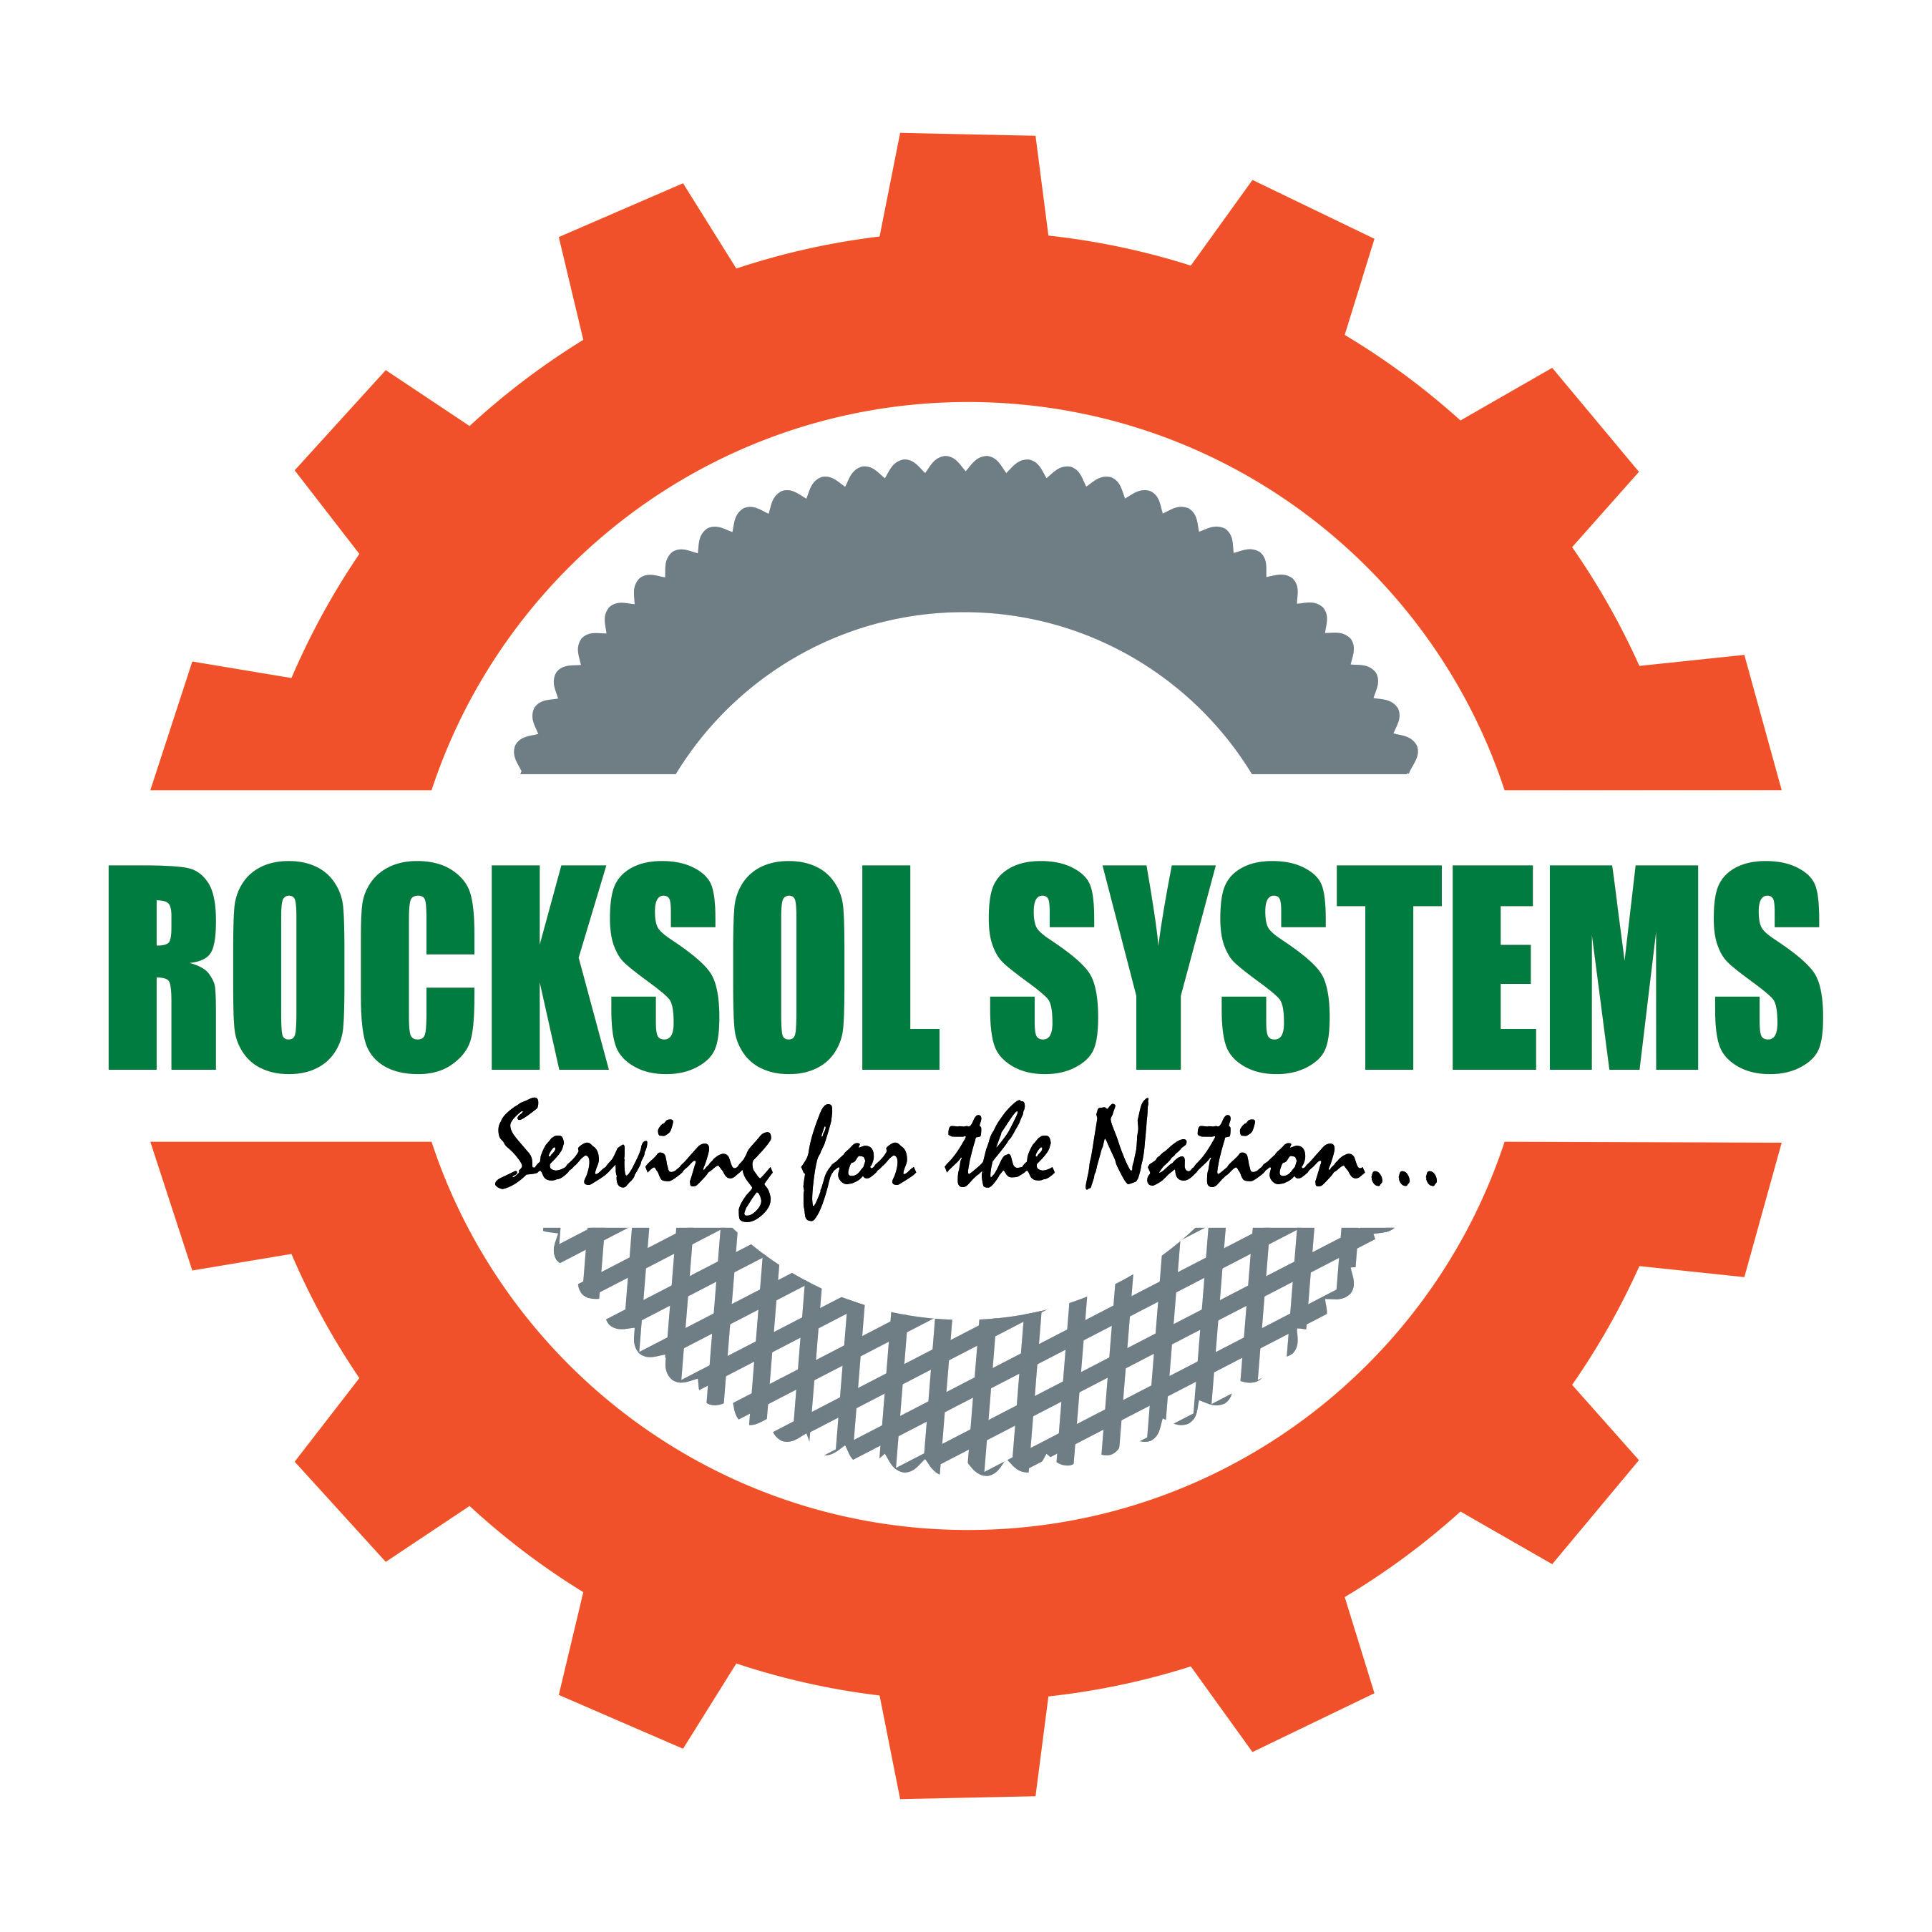 ROCKSOL SYSTEMS